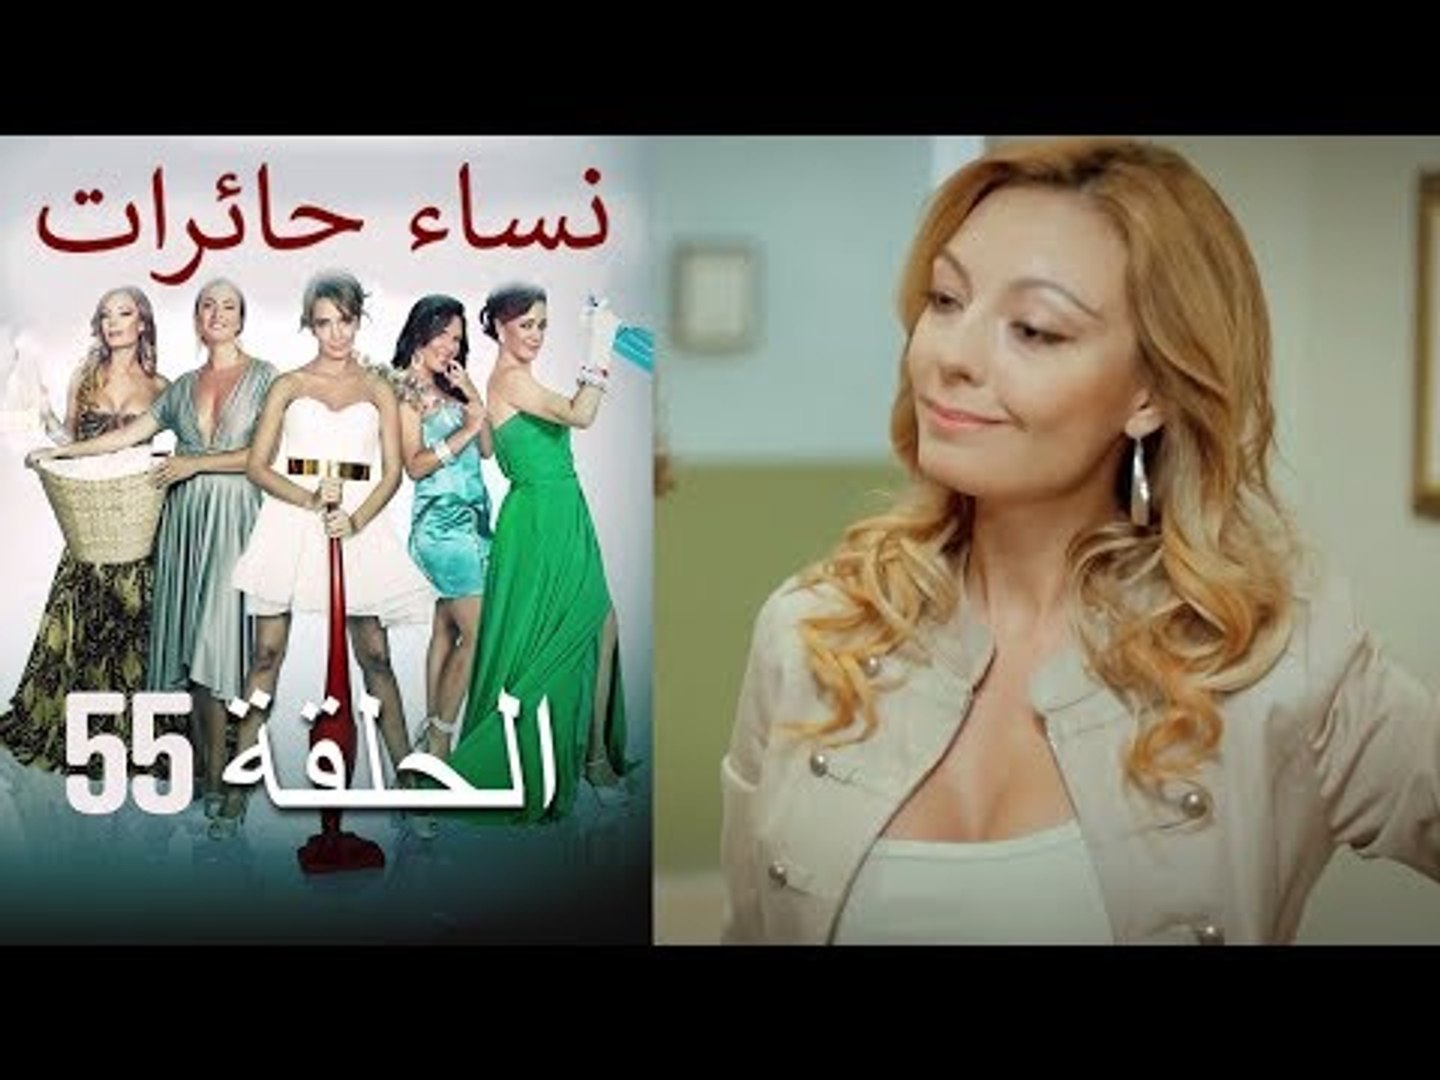 نساء حائرات 55 - Nisa Hairat - فيديو Dailymotion